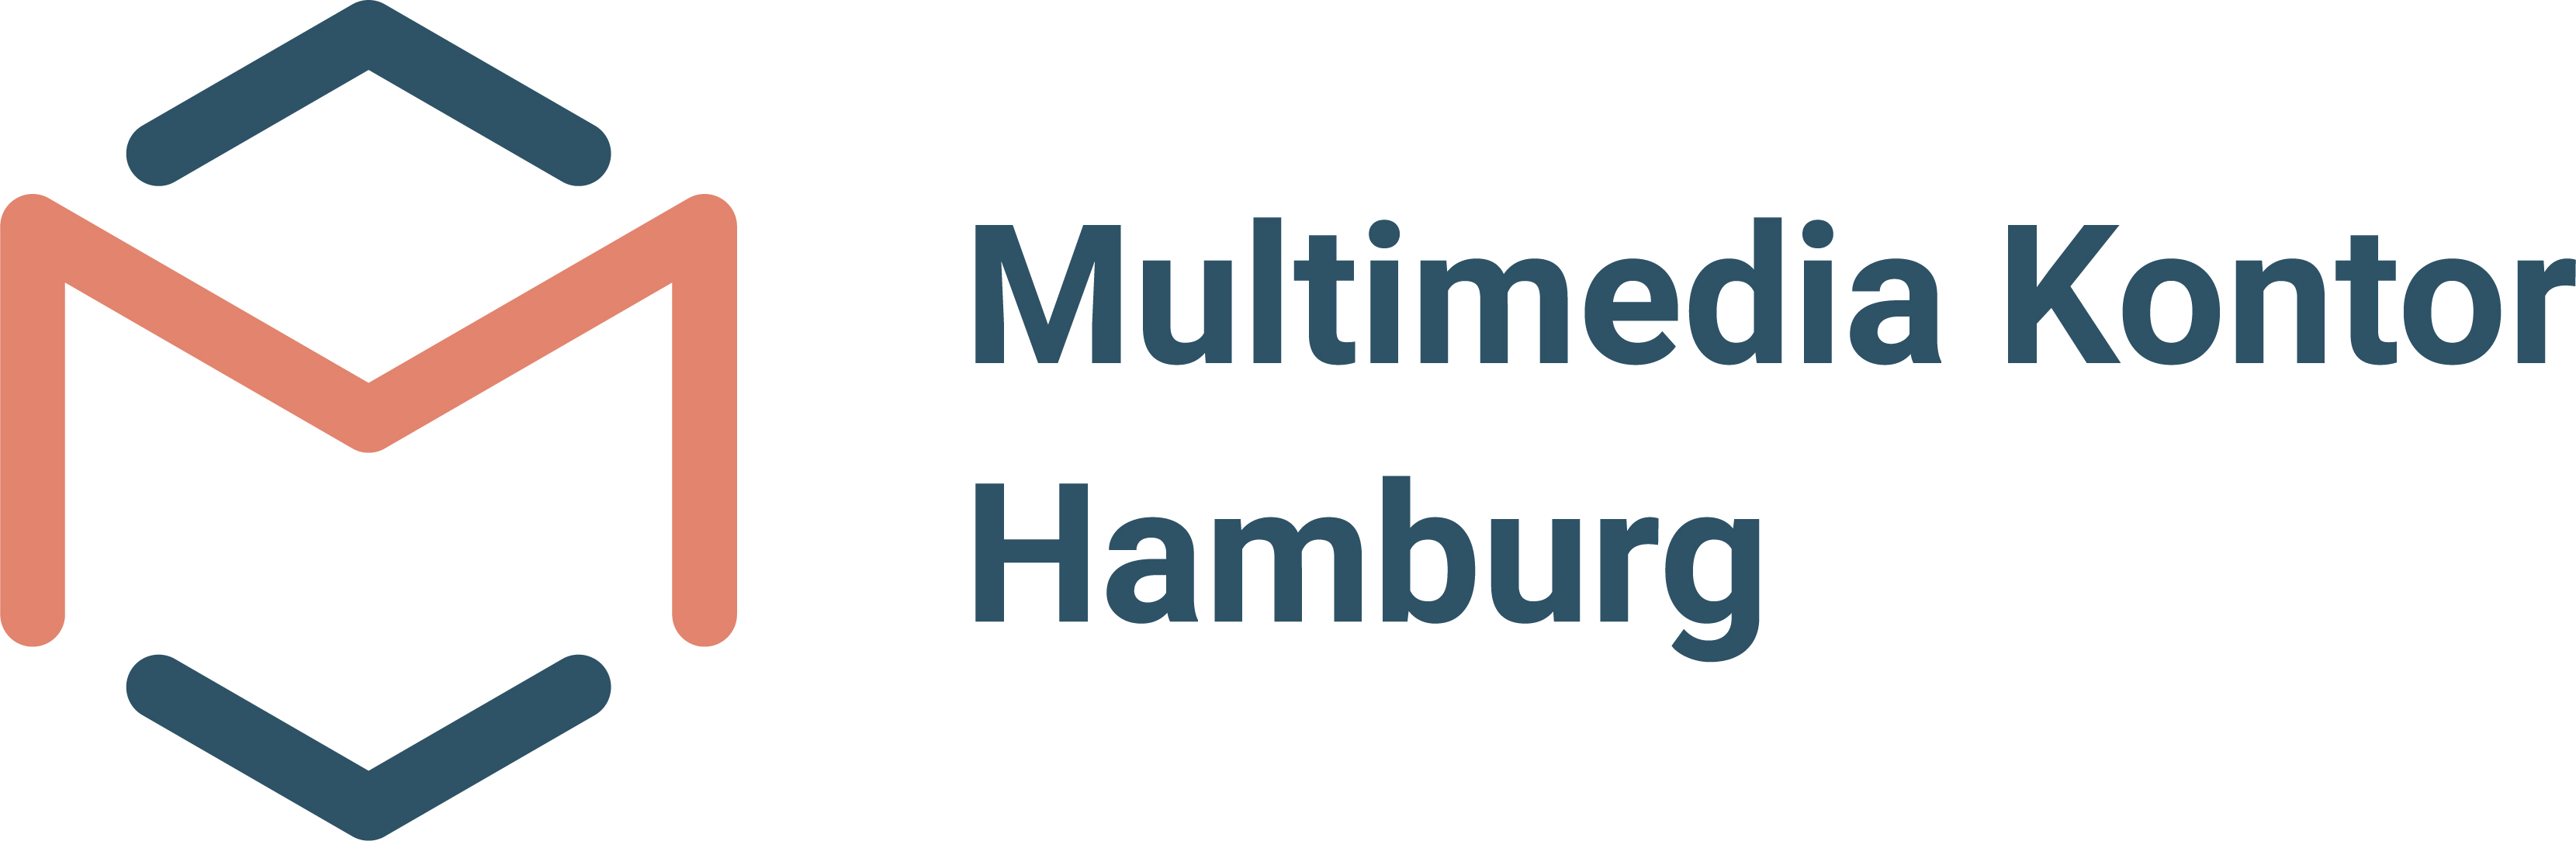 Logo von Multimedia Kontor Hamburg gGmbH